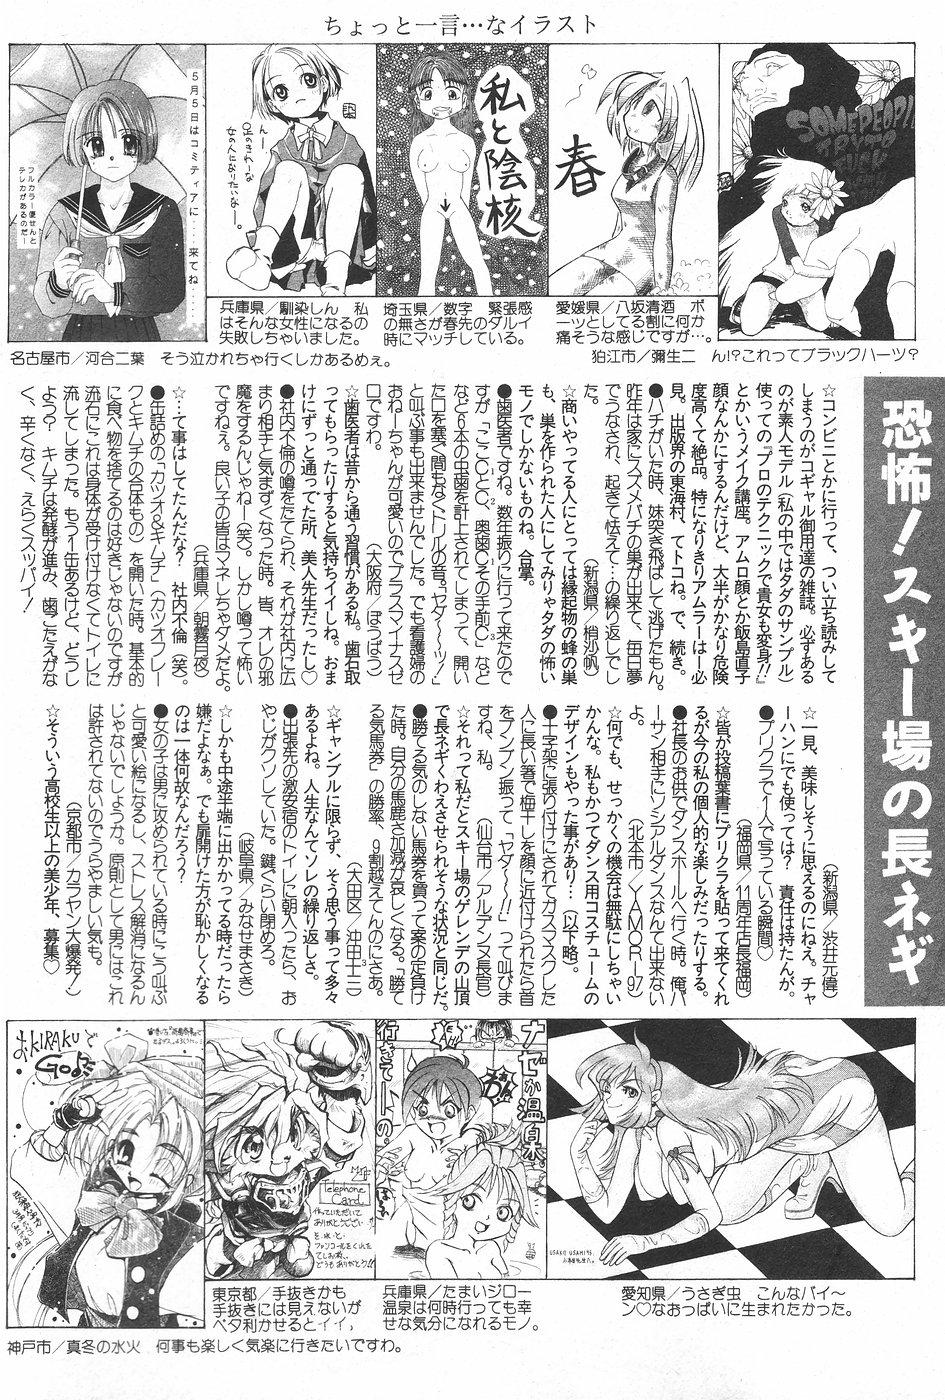 Manga Hotmilk 1997-05 175